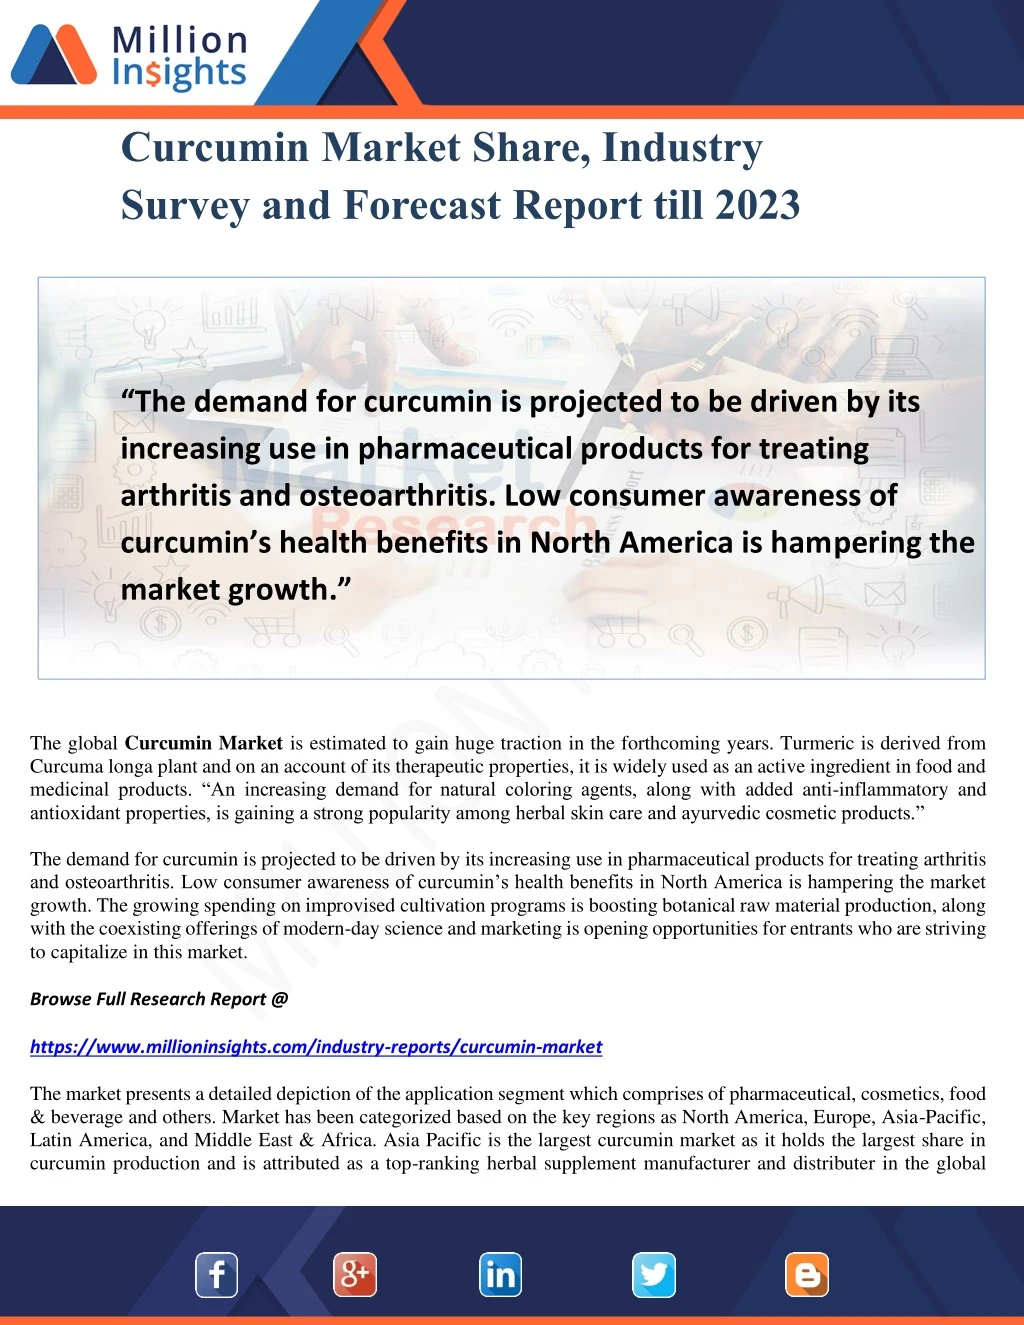 curcumin market share industry survey